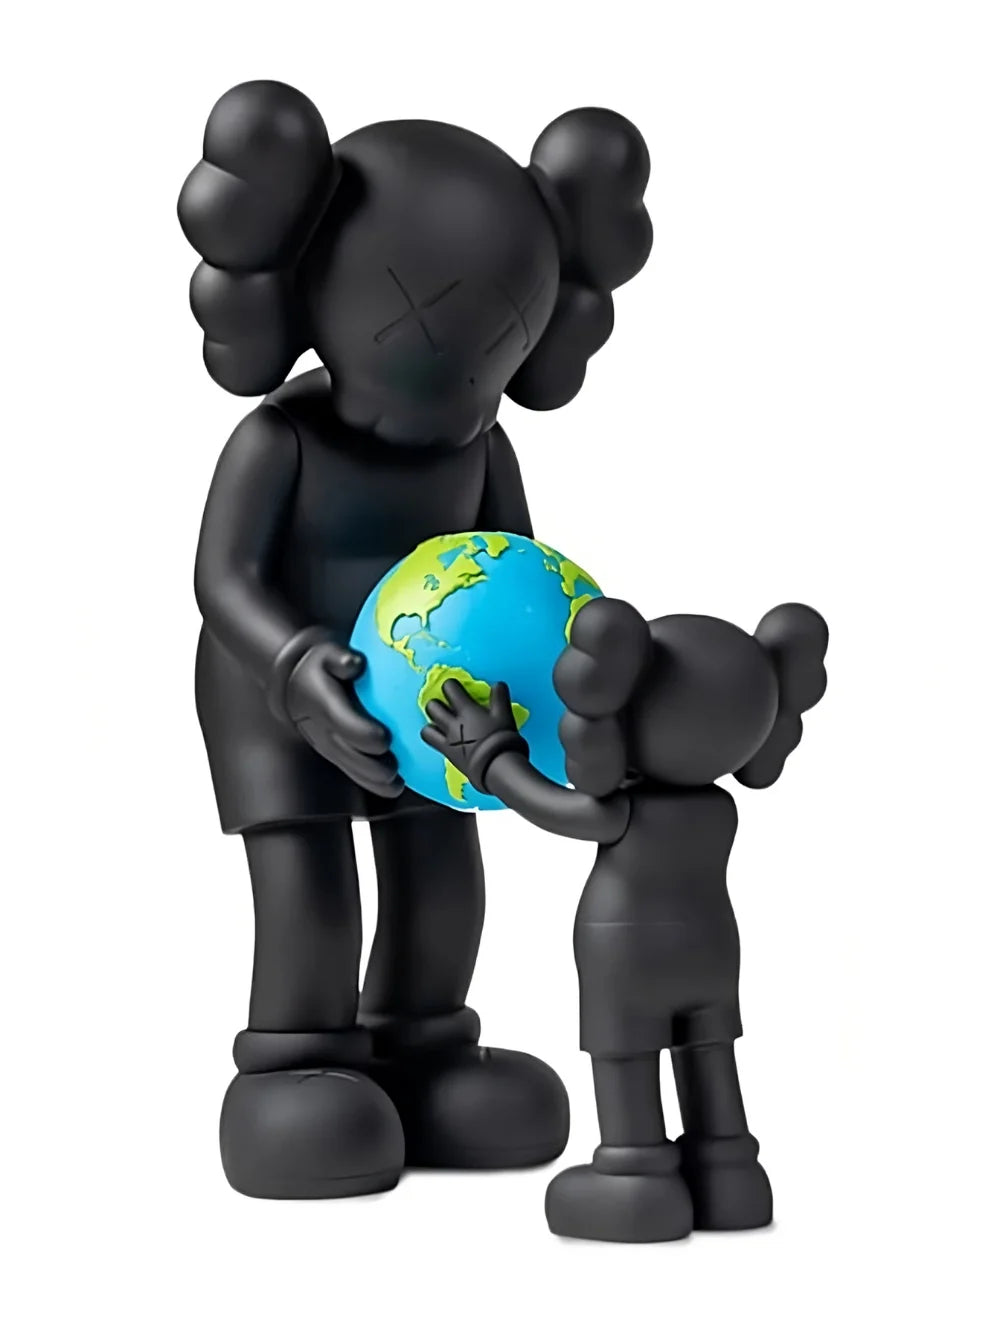 KAWS "The Promise (Black)" Sculpture